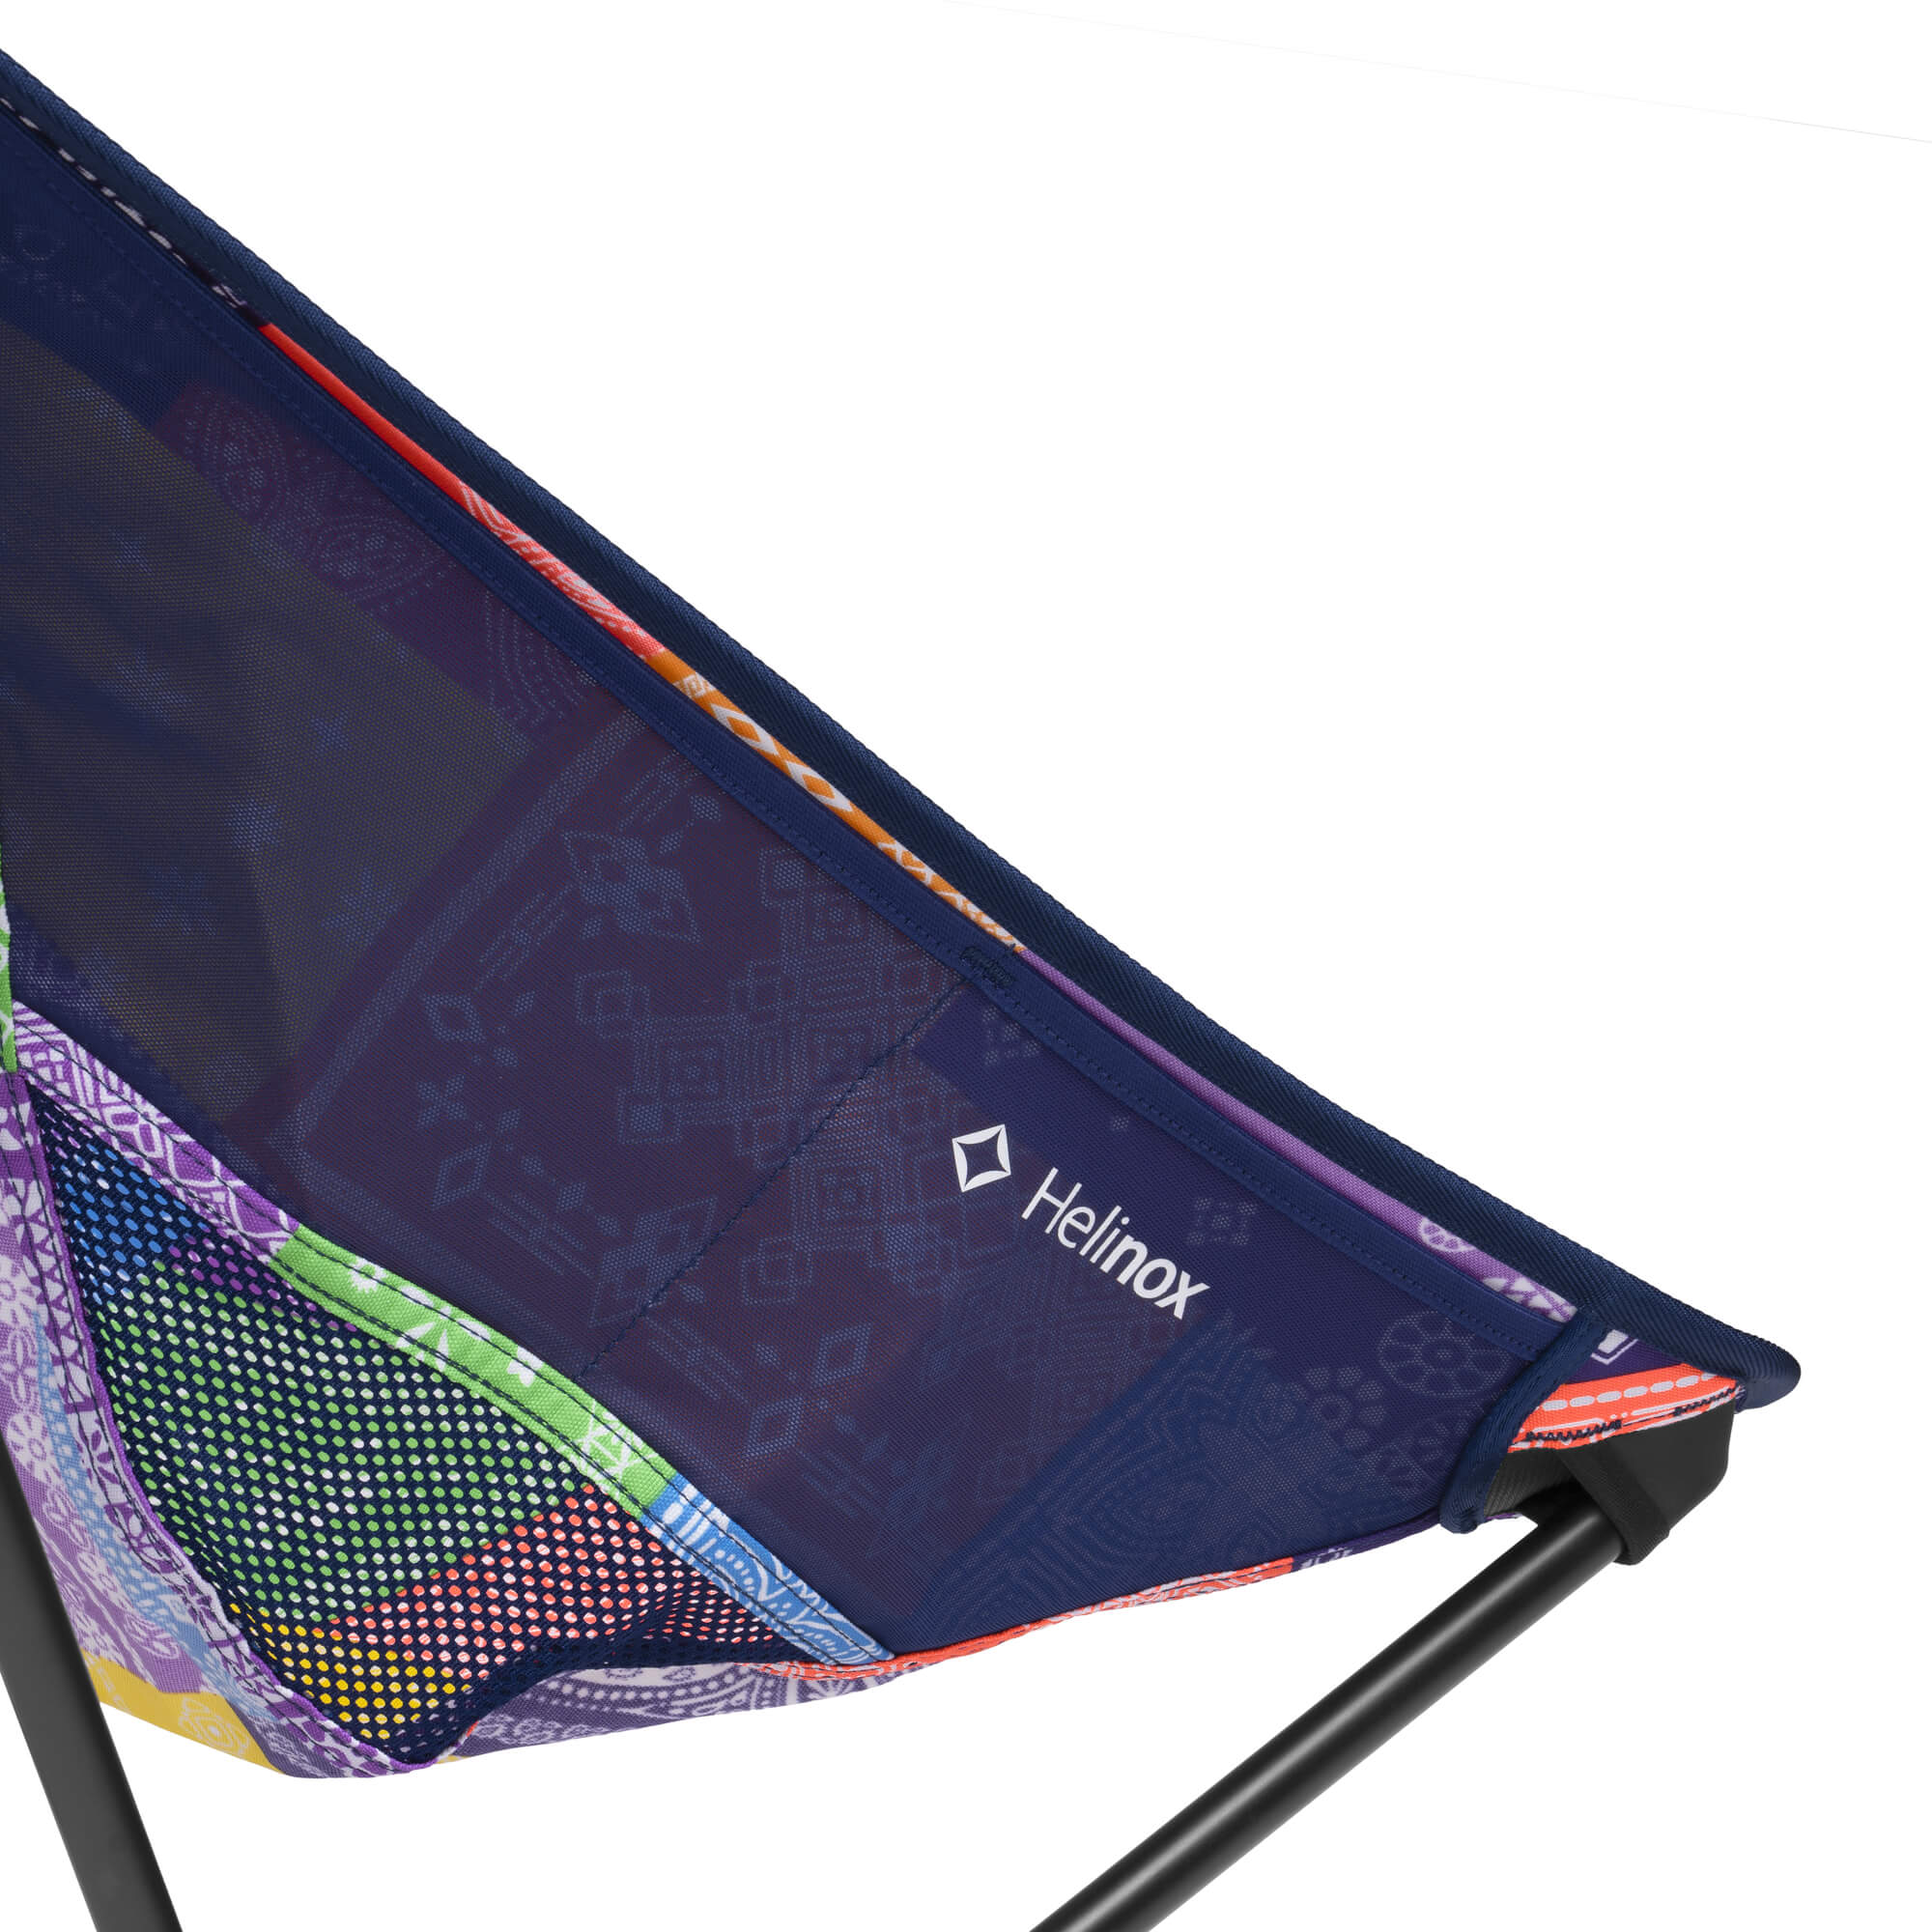 Helinox Sunset Chair | Free Shipping & 5 Year Warranty